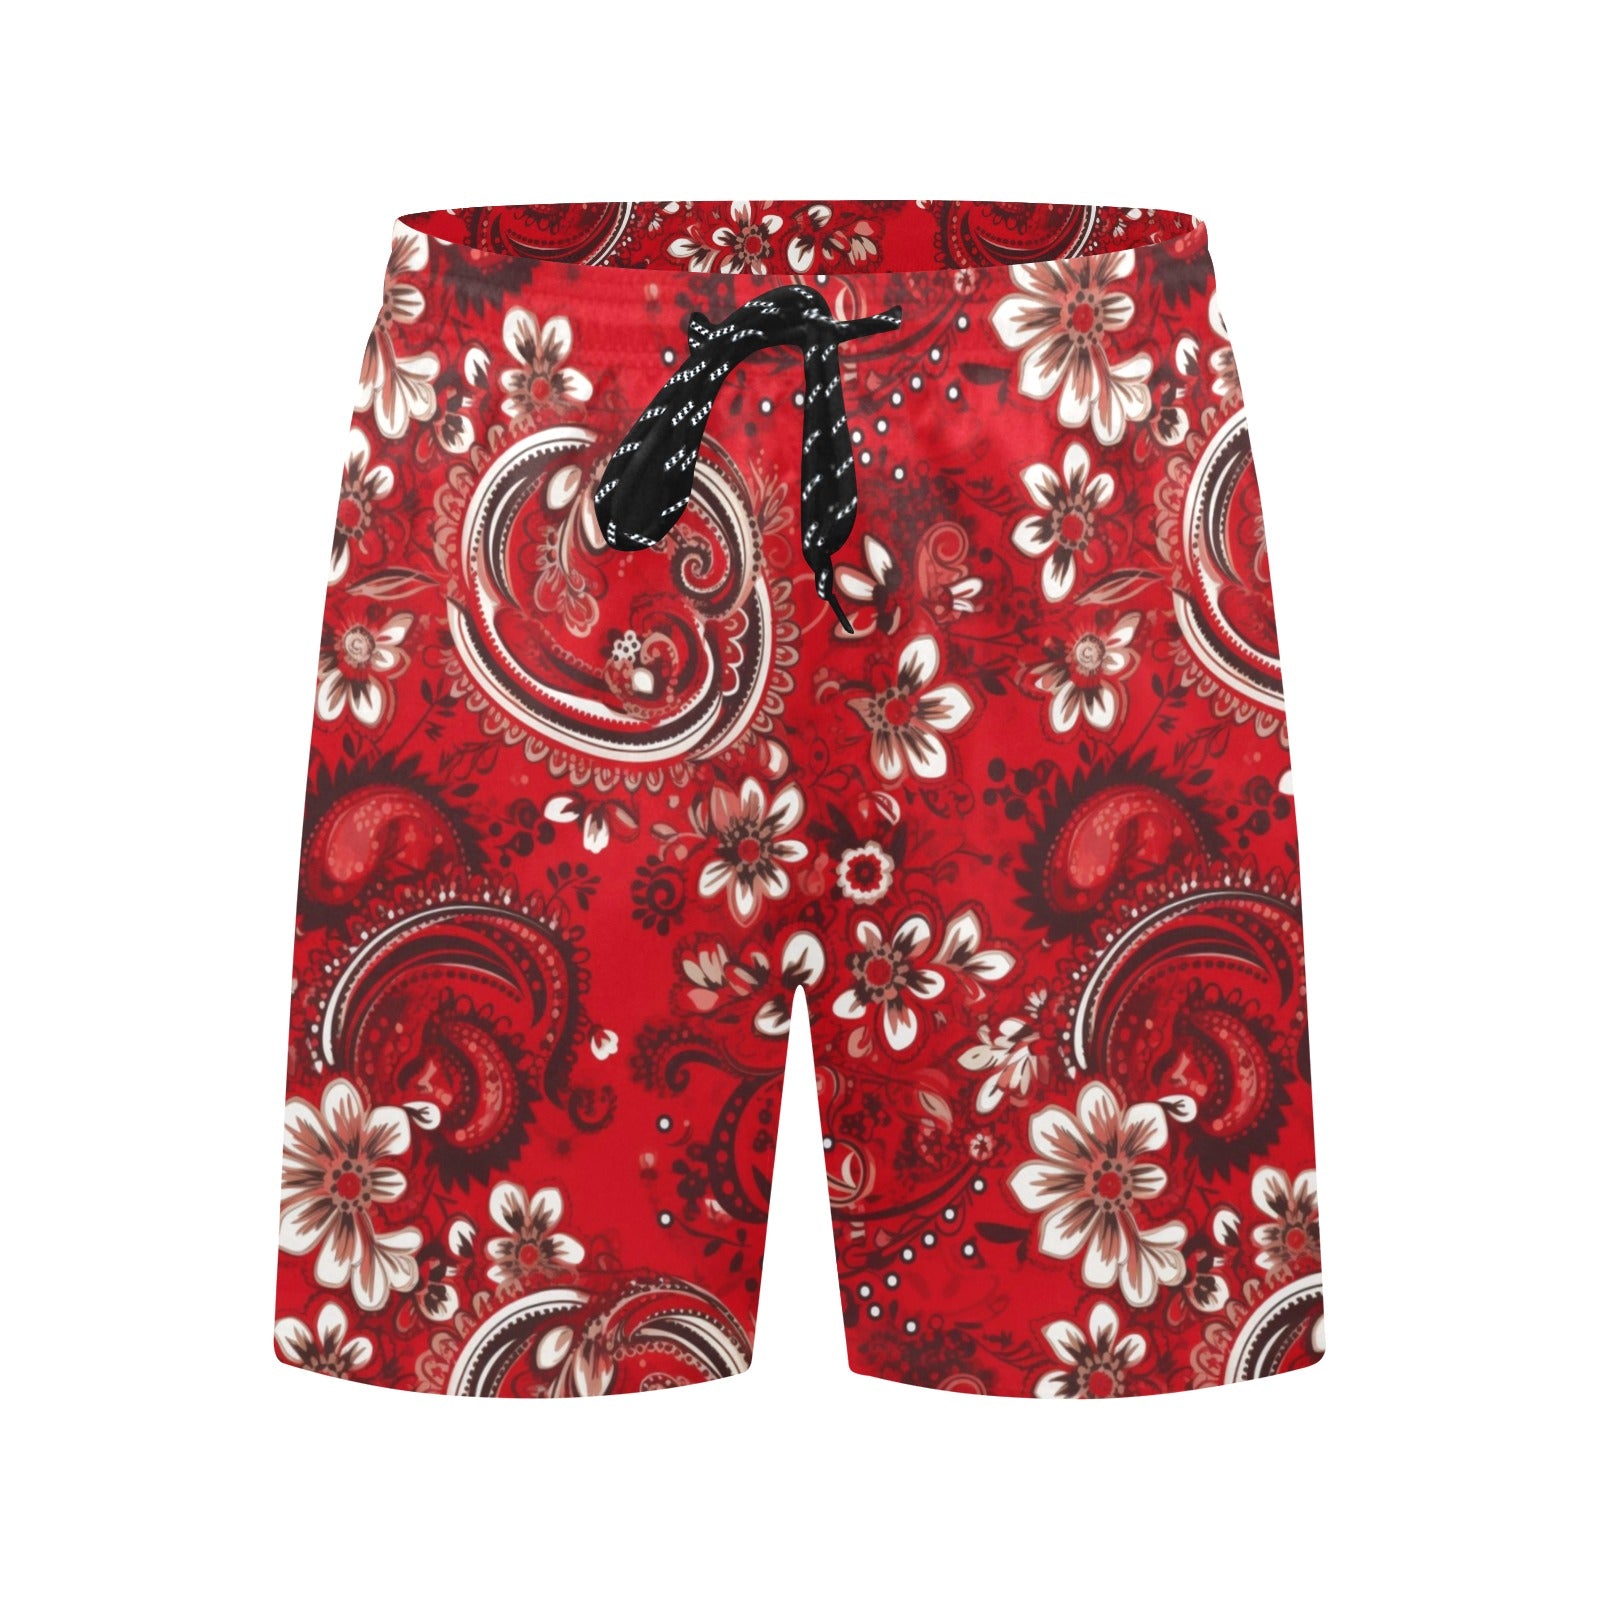 Red Bandana Men Swim Trunks, Paisley Mid Length Shorts Beach Pockets Mesh Lining Drawstring Boys Casual Bathing Suit Plus Size Swimwear Starcove Fashion